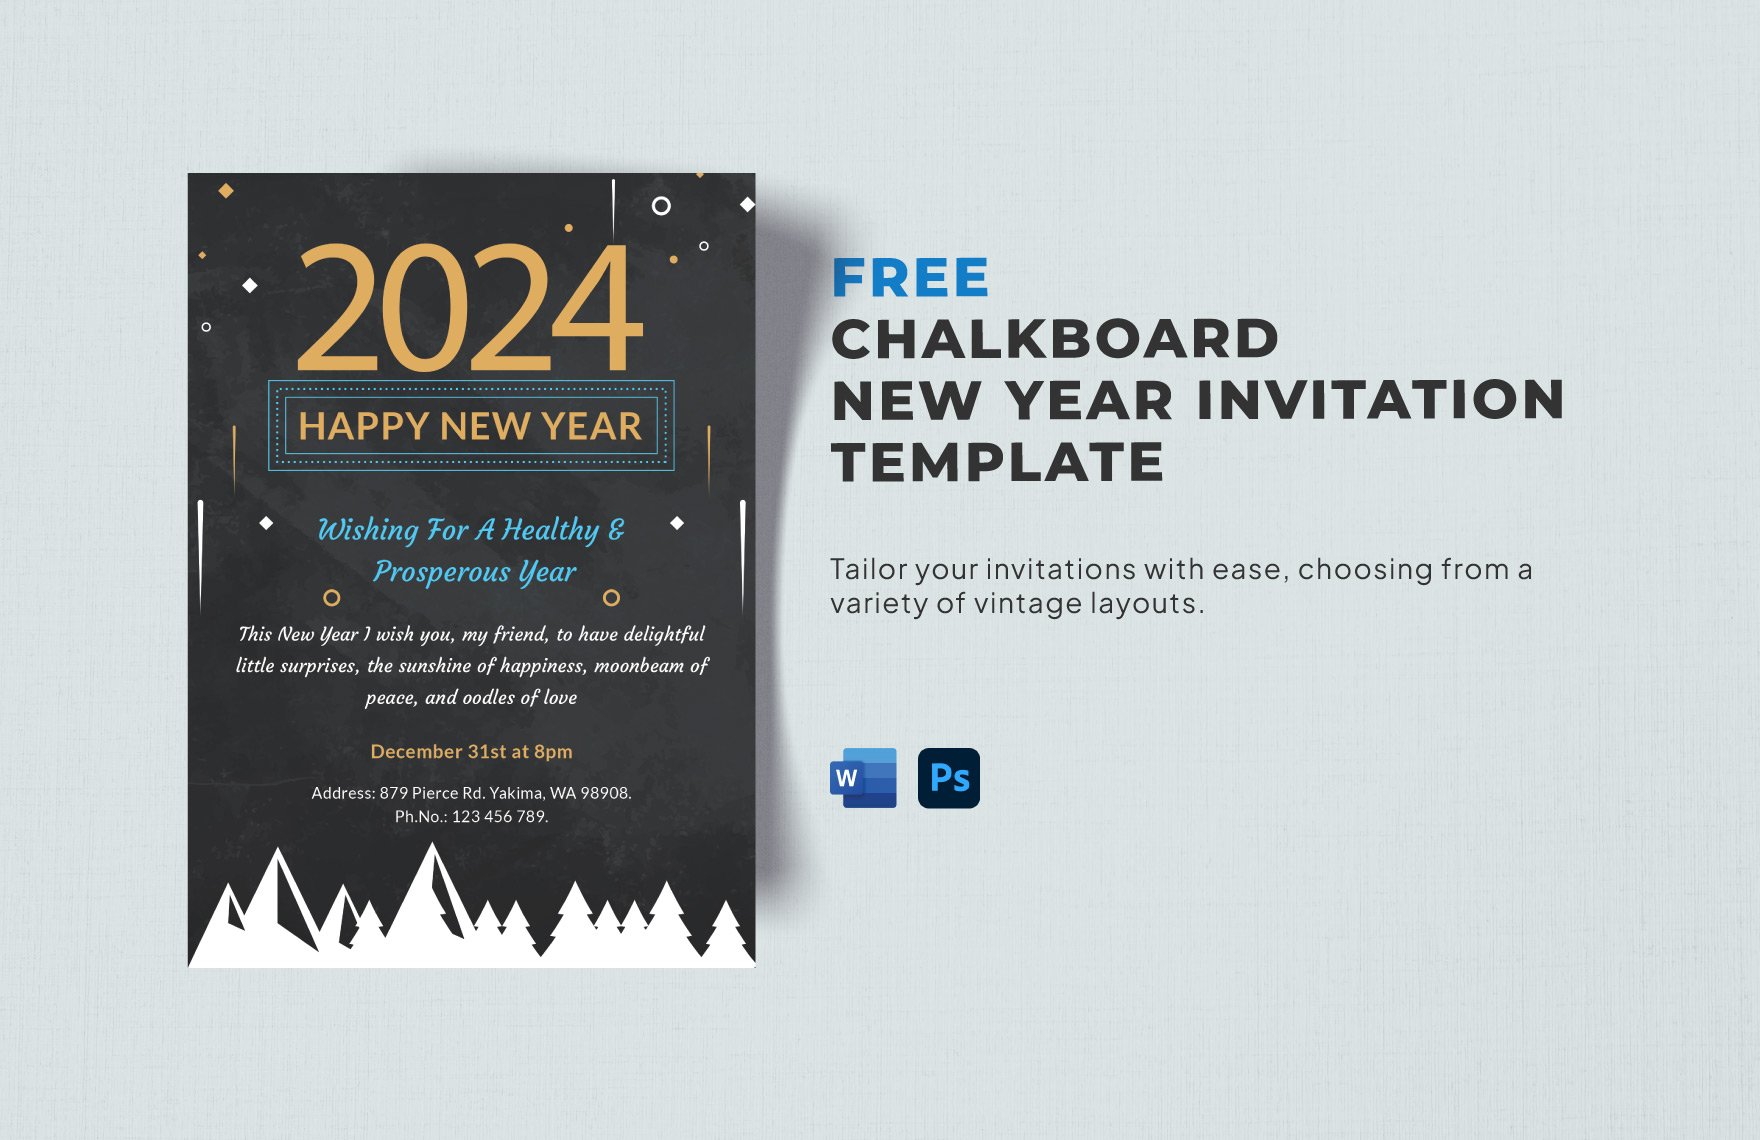 Free Chalkboard New Year Invitation Template